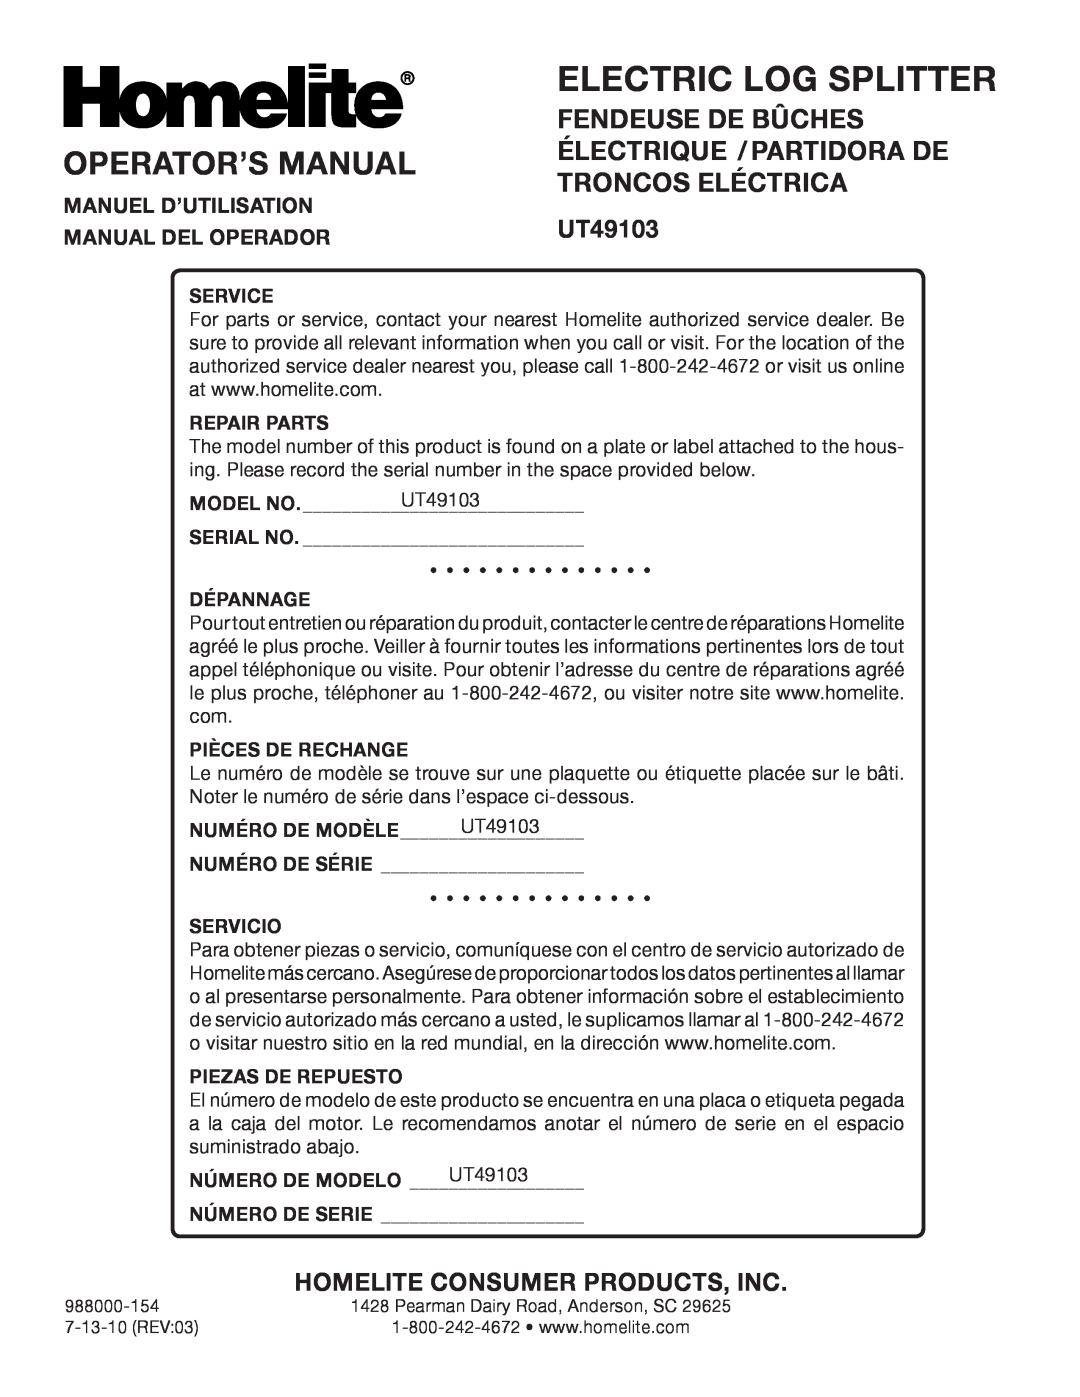 Homelite UT49103 Operator’S Manual, Manuel D’Utilisation, Manual Del Operador, Service, Repair Parts, Model No 